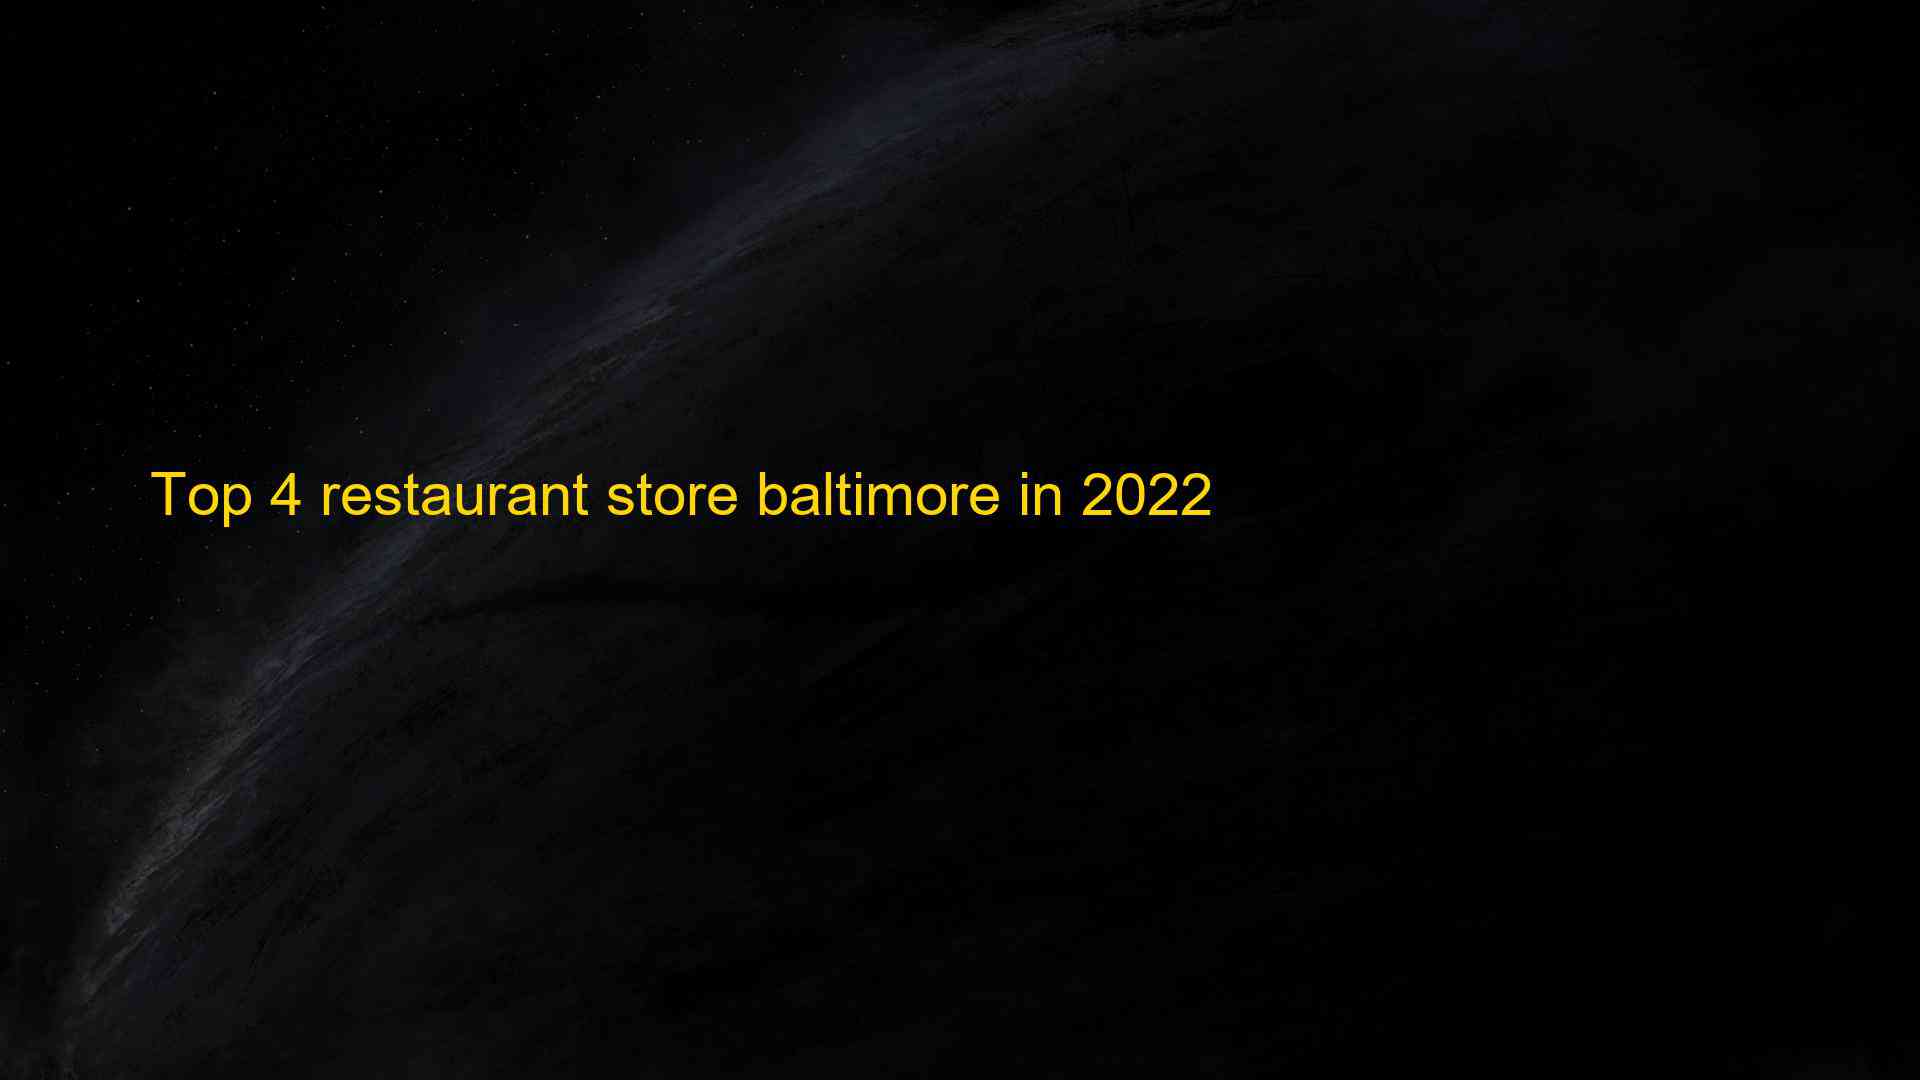 Top 4 restaurant store baltimore in 2022 1662845420